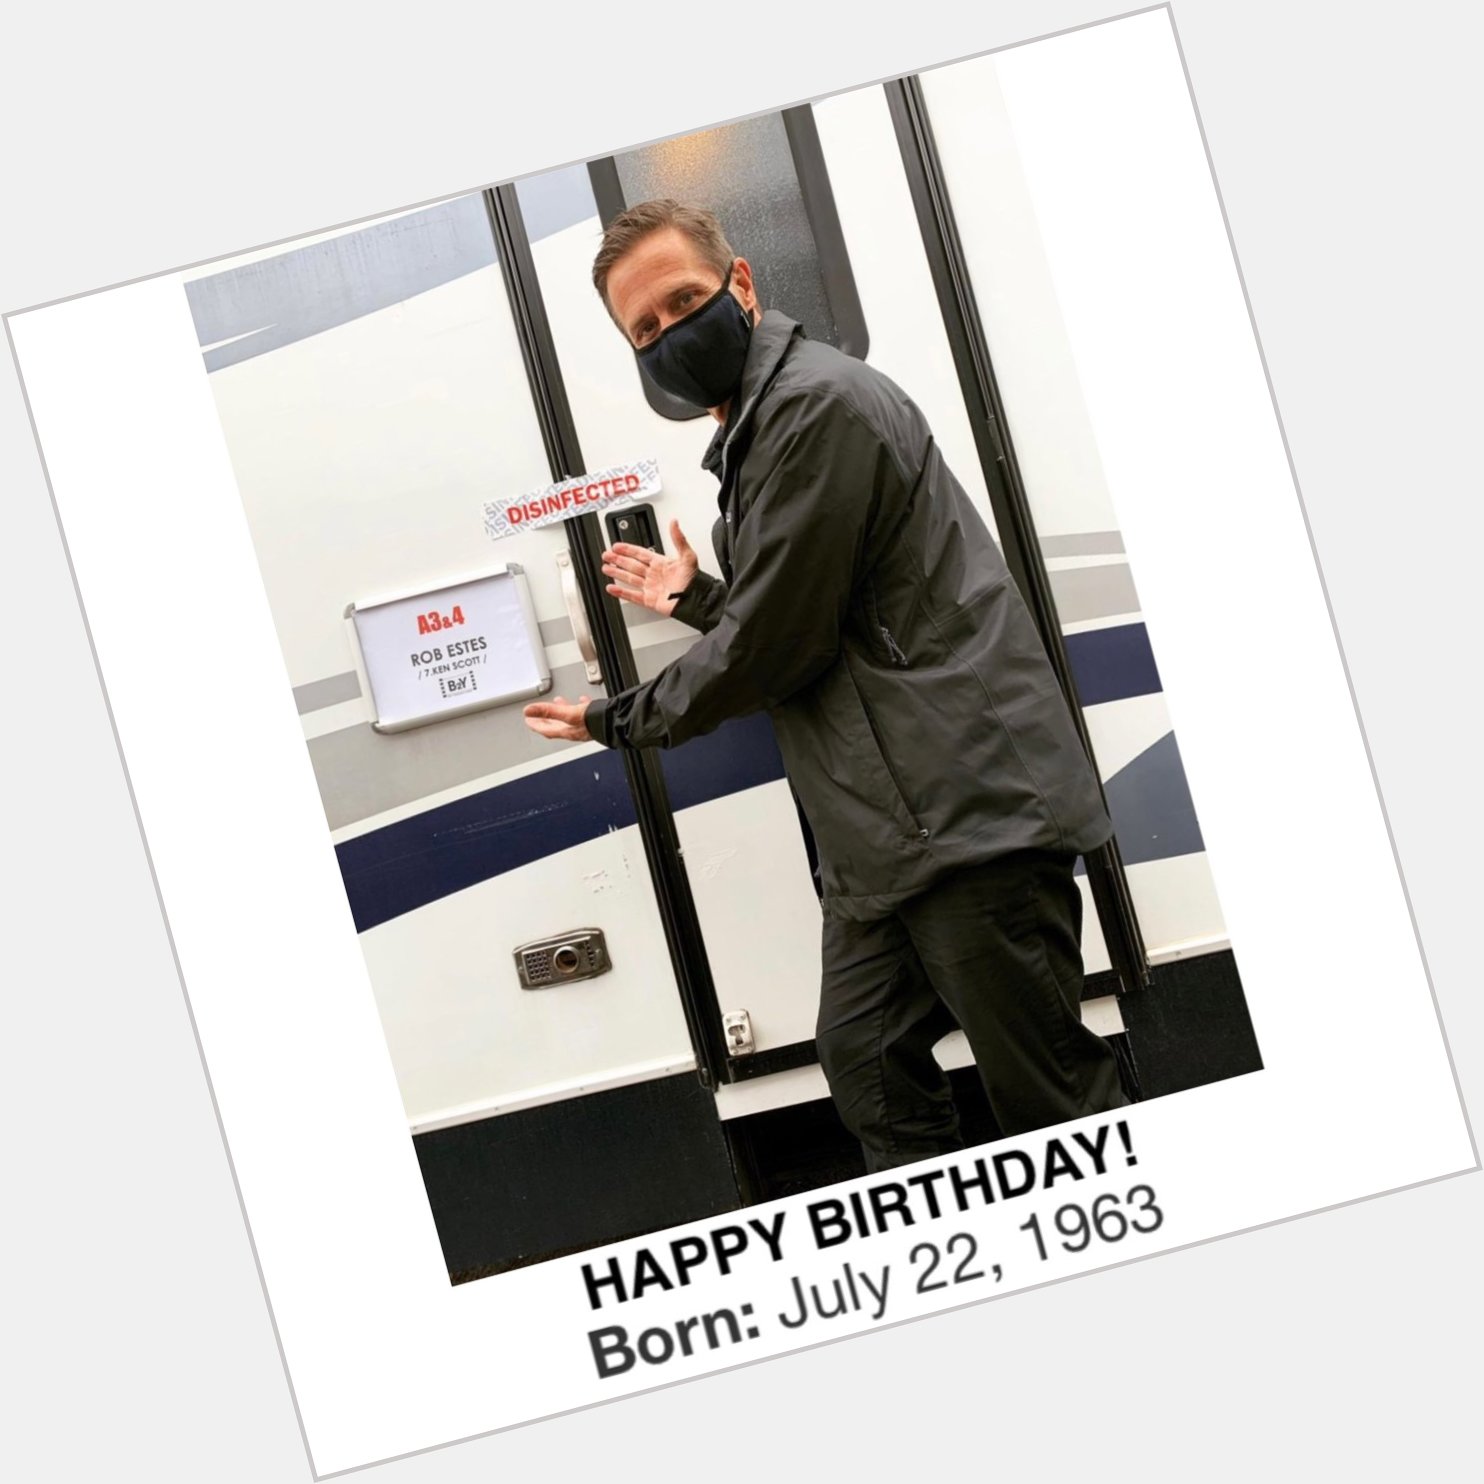 Happy birthday to Rob Estes. 